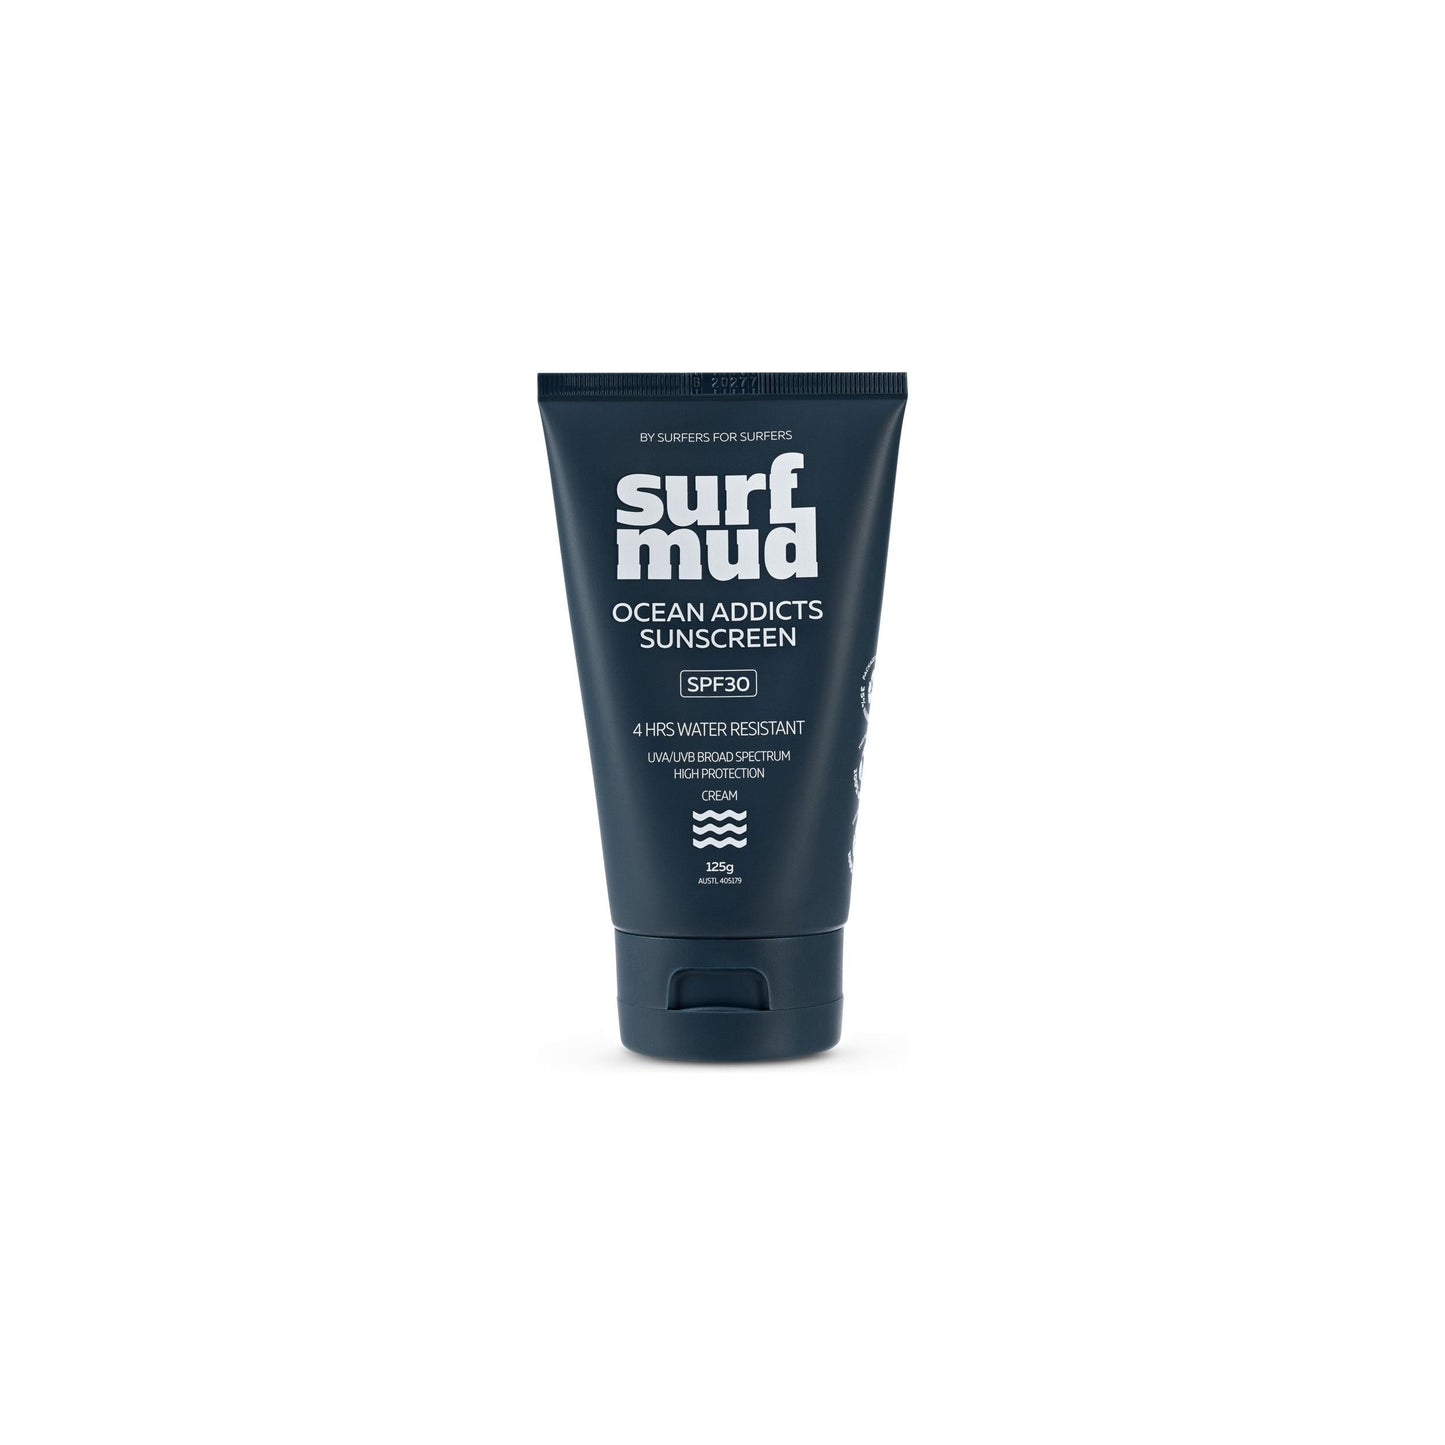 Surf Mud - Ocean Addicts Sunscreen SPF 30+ - Velocity 21